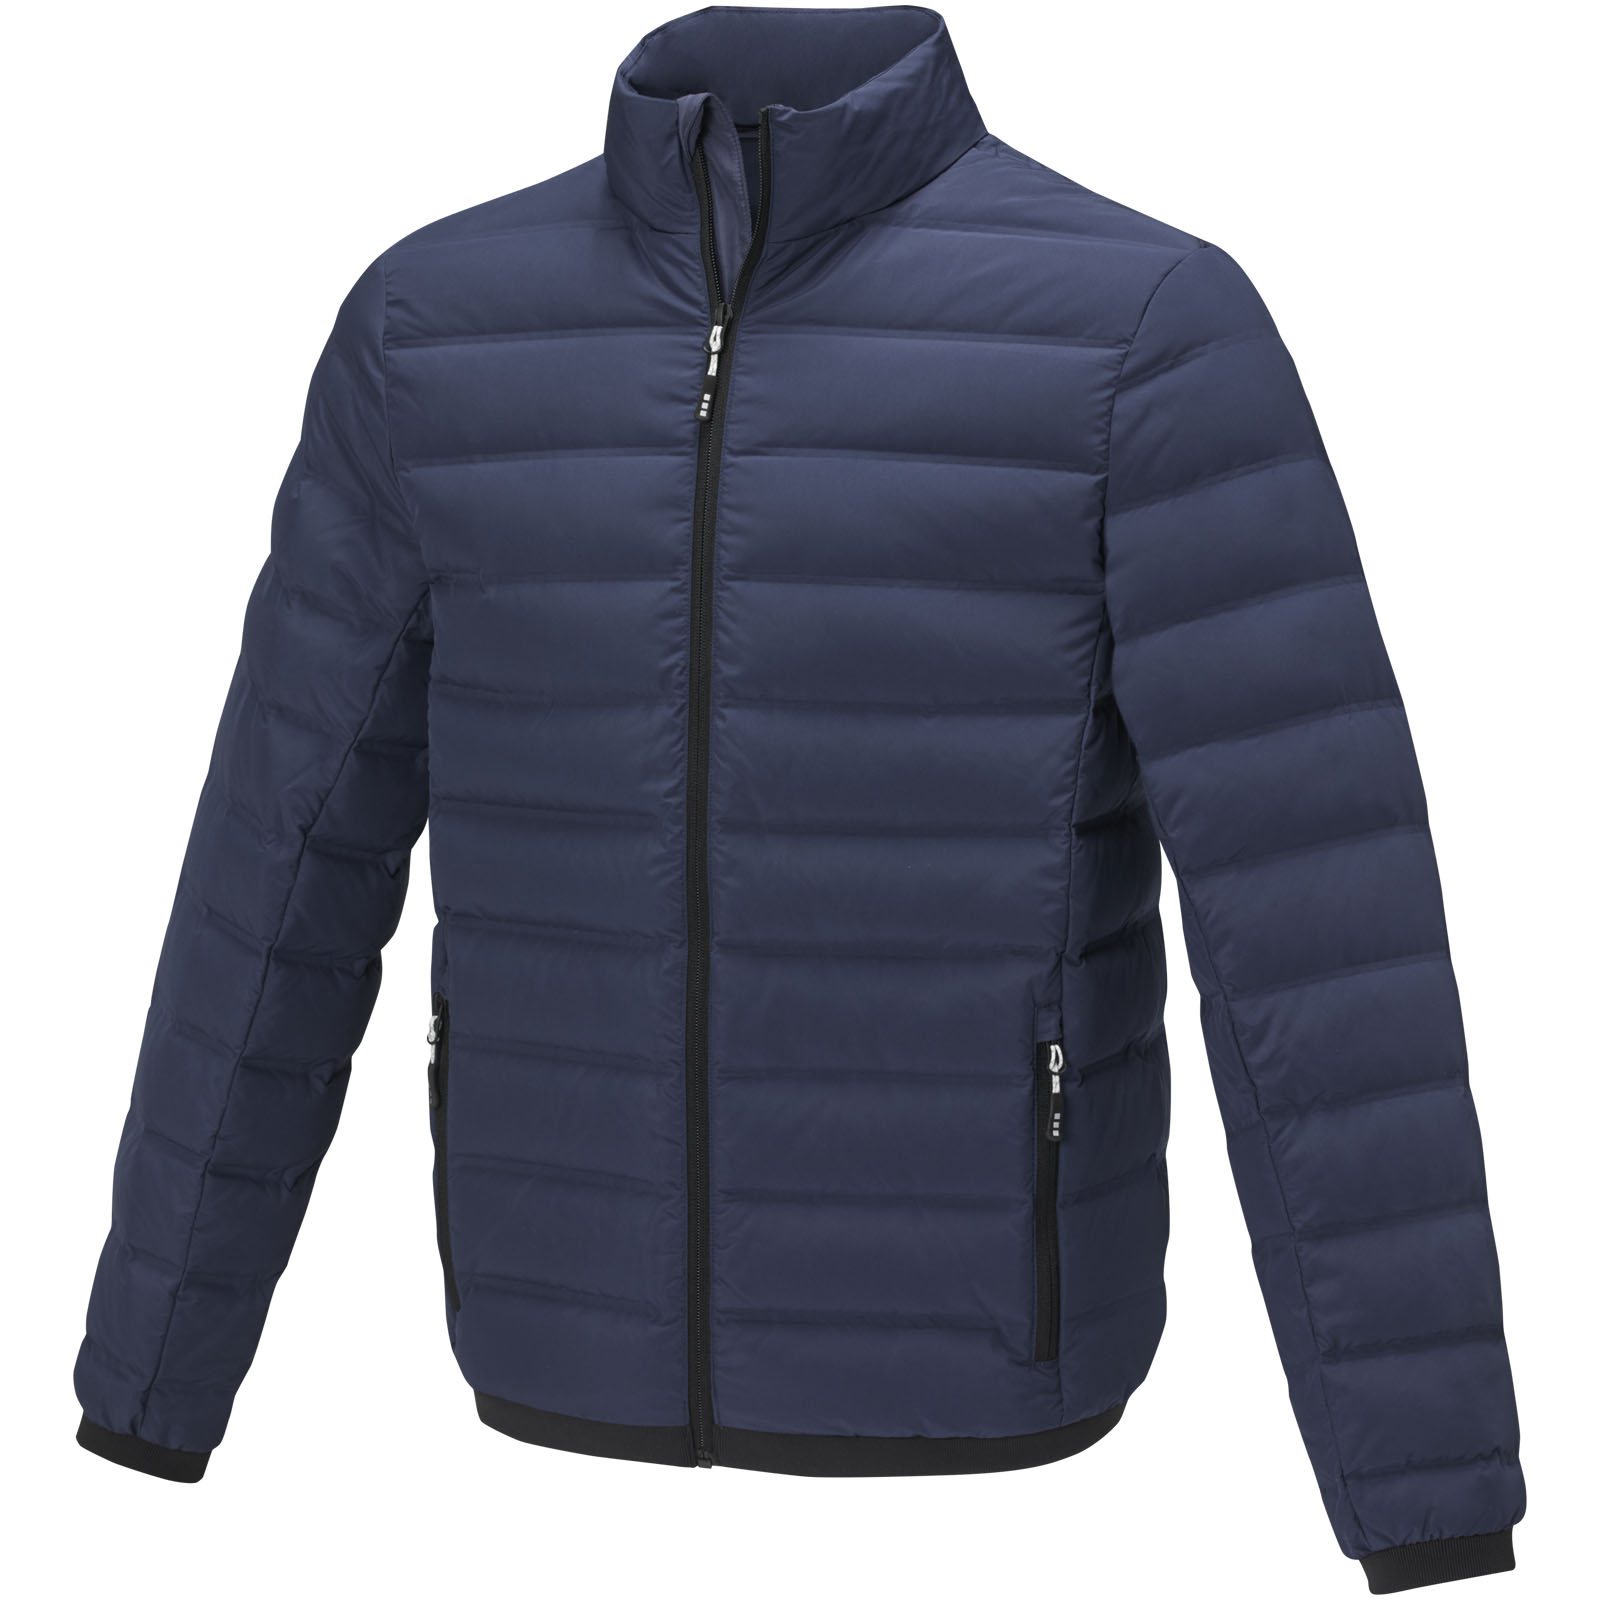 Jackets - Macin men's insulated down jacket